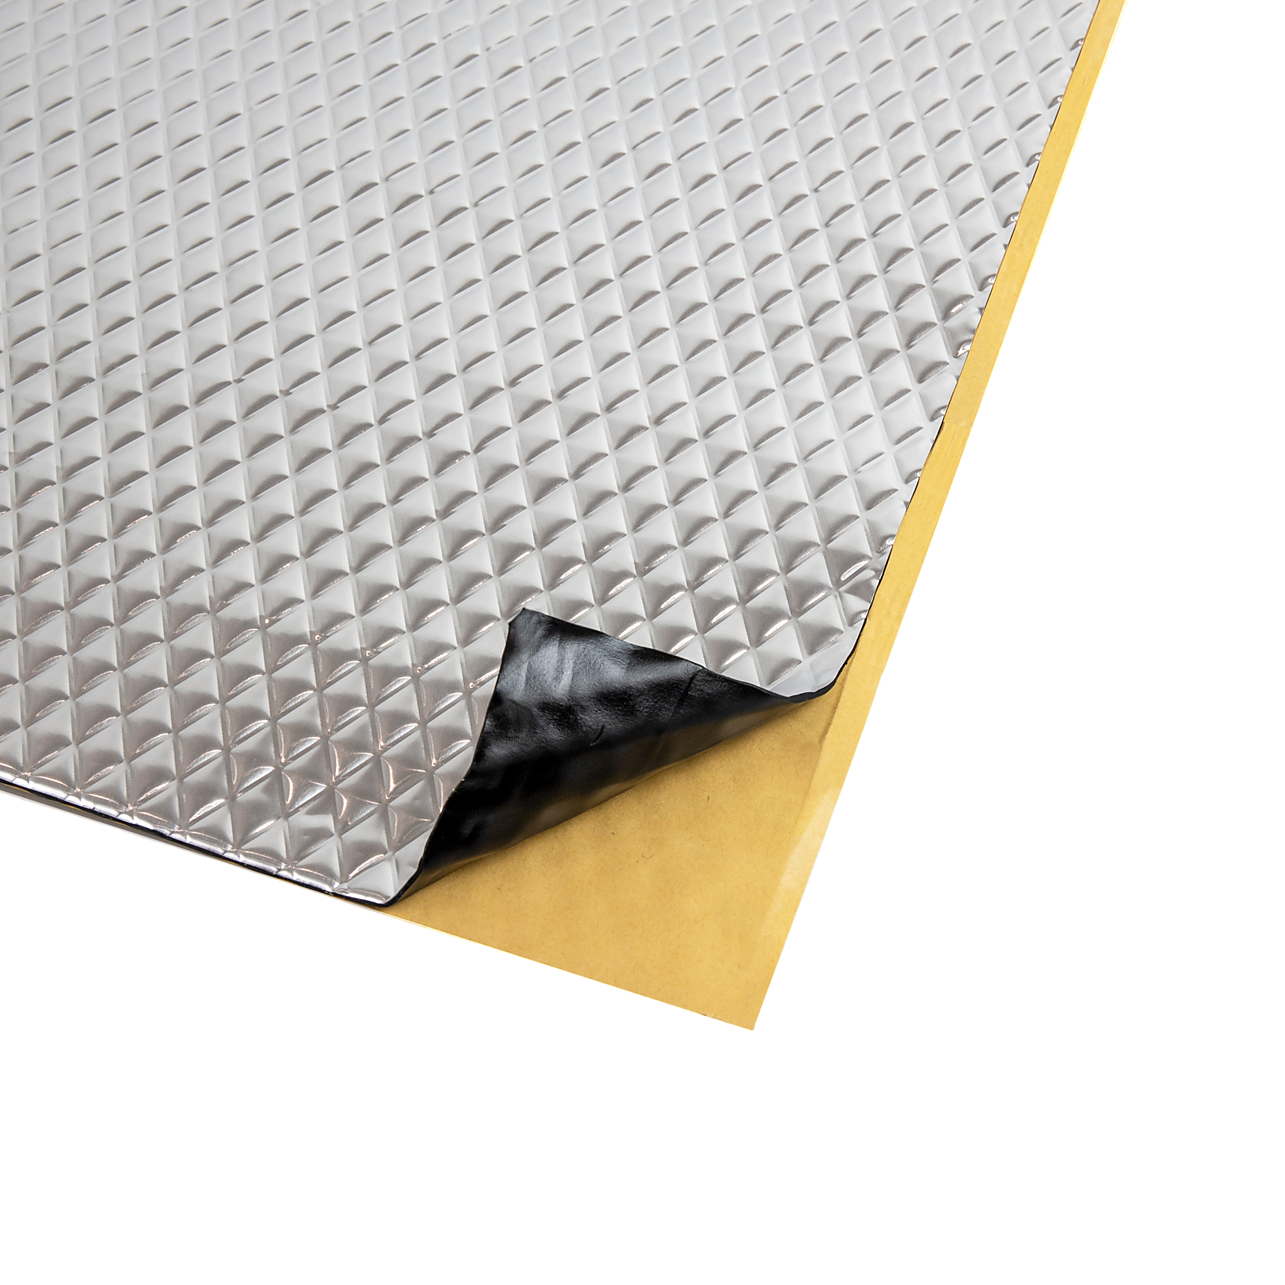 Car Insulation Mat Heat Shield Noise Adhesive Foam